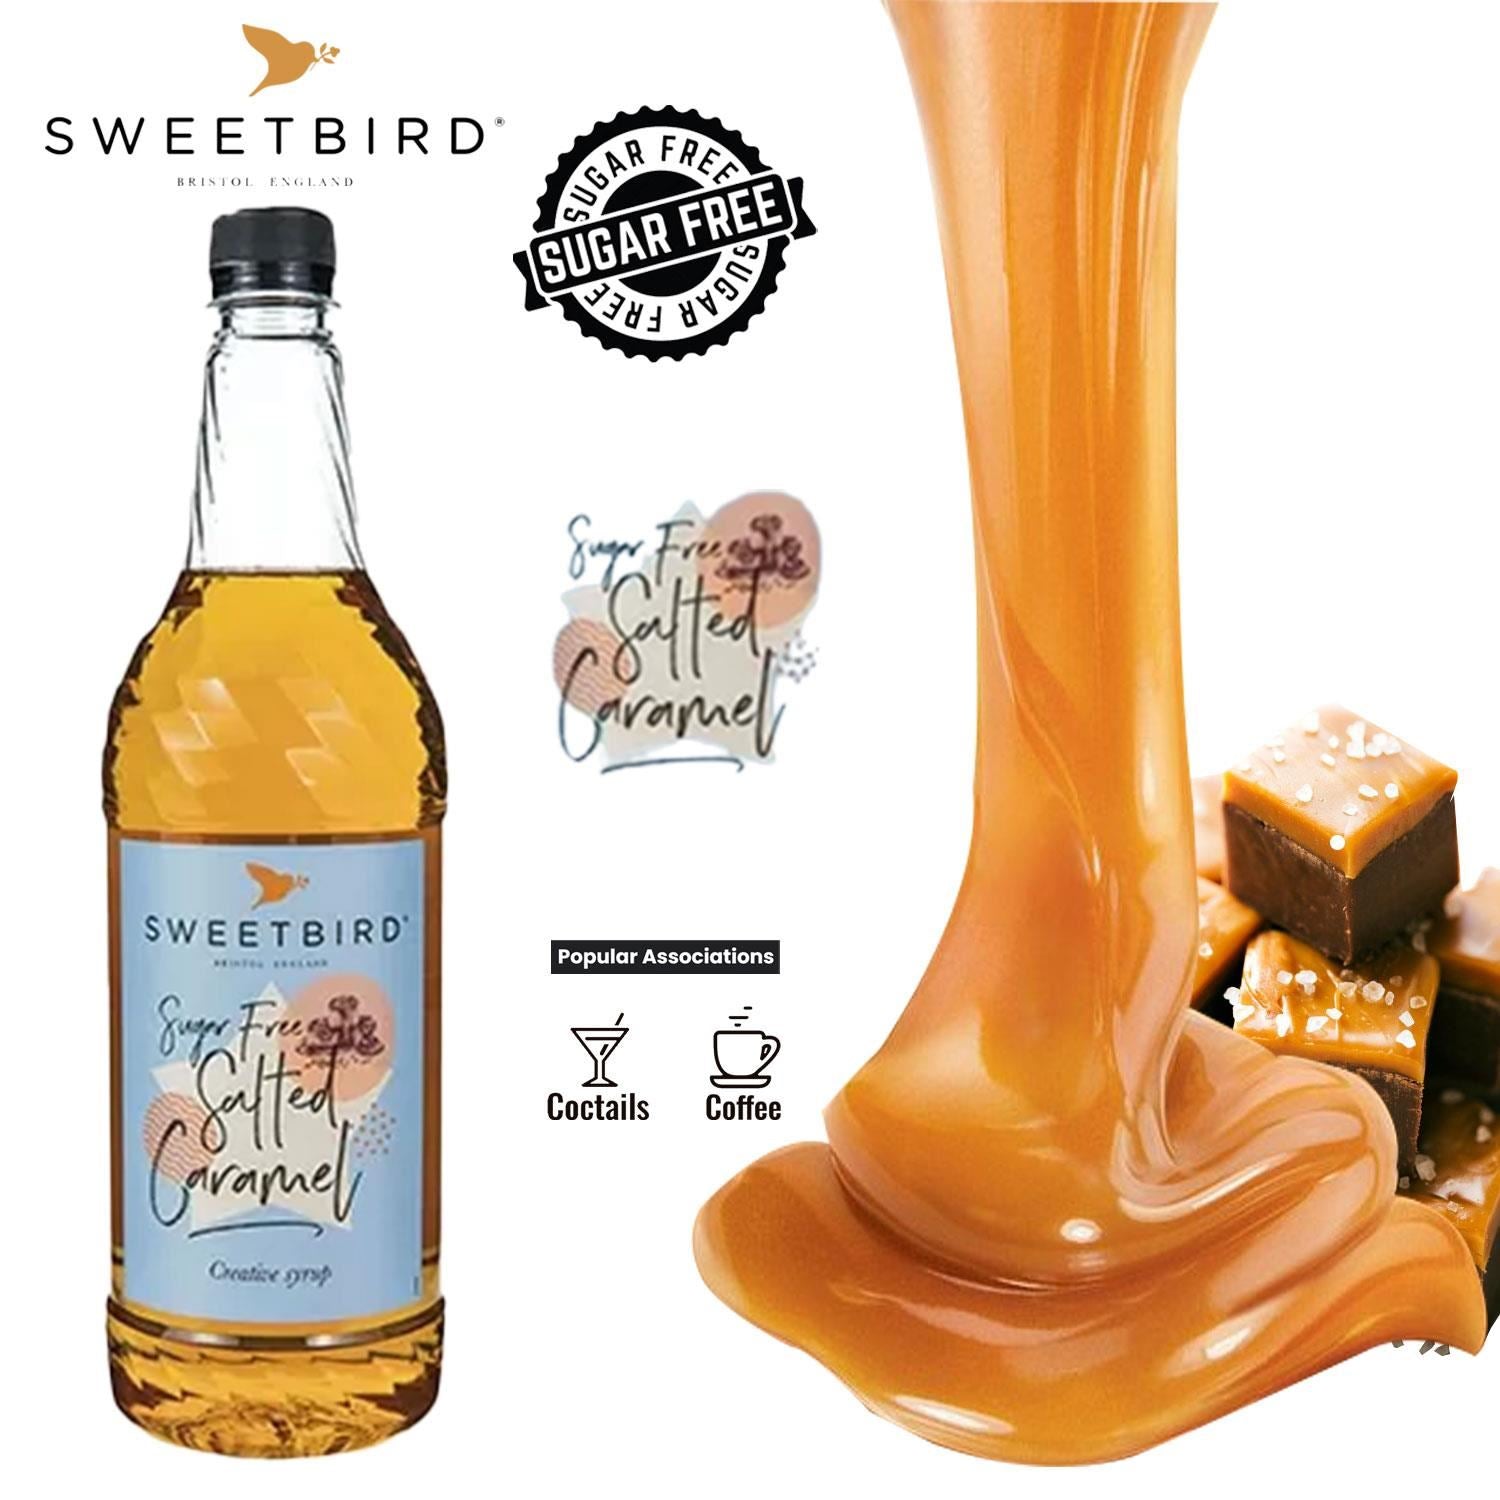 Sirop pour café Sweetbird Sugar-Free Salted Caramel, 1 l - Coffee Friend